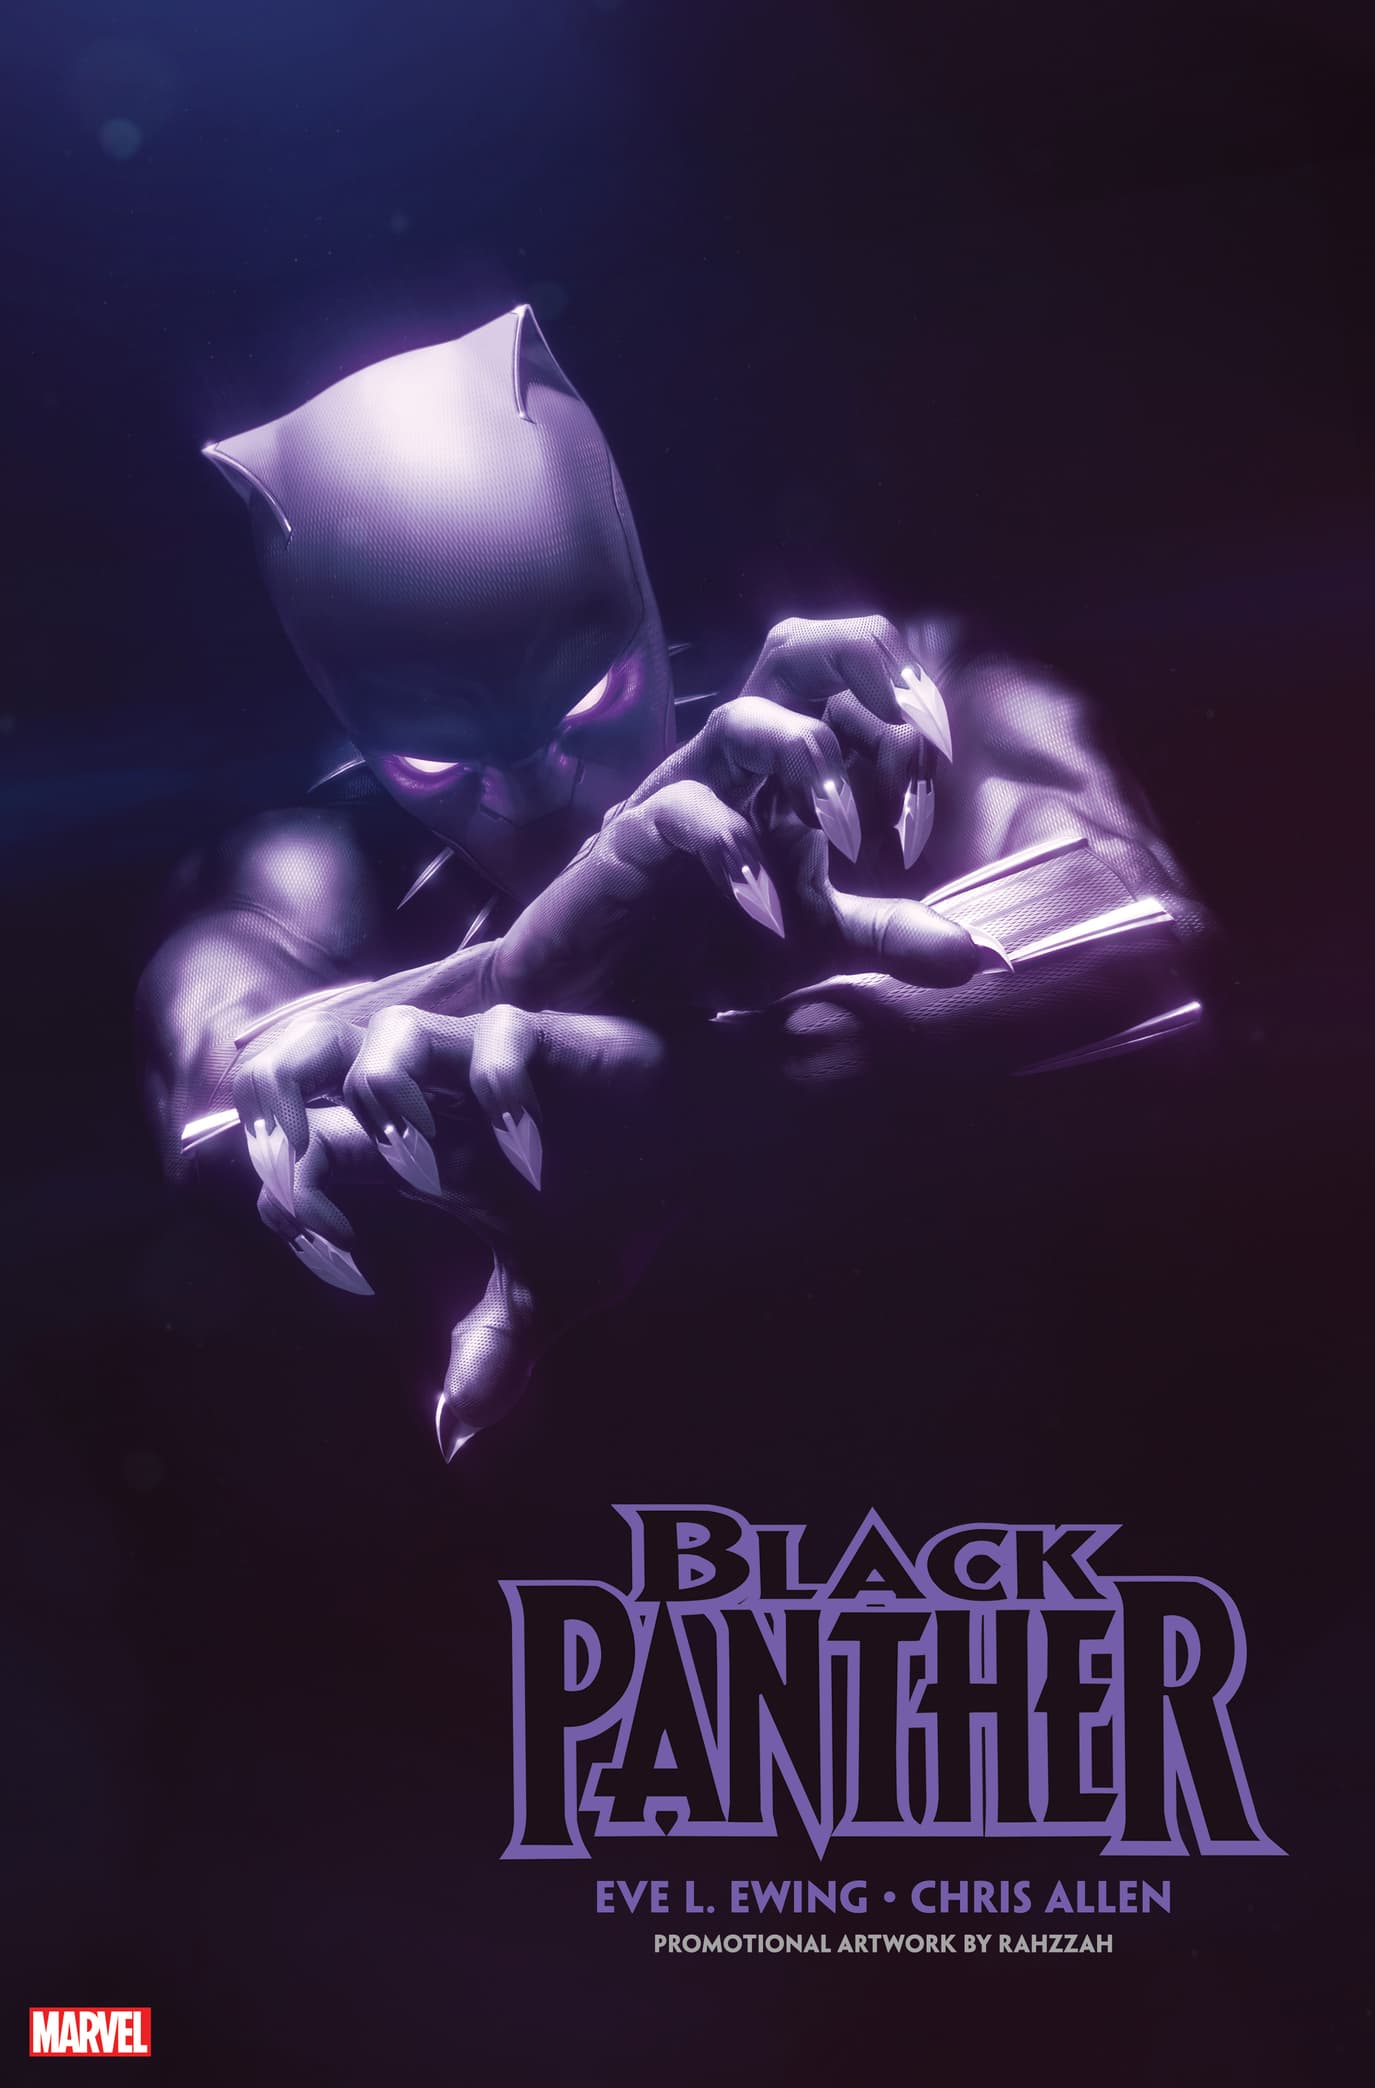 'Black Panther' teaser art by Rahzzah